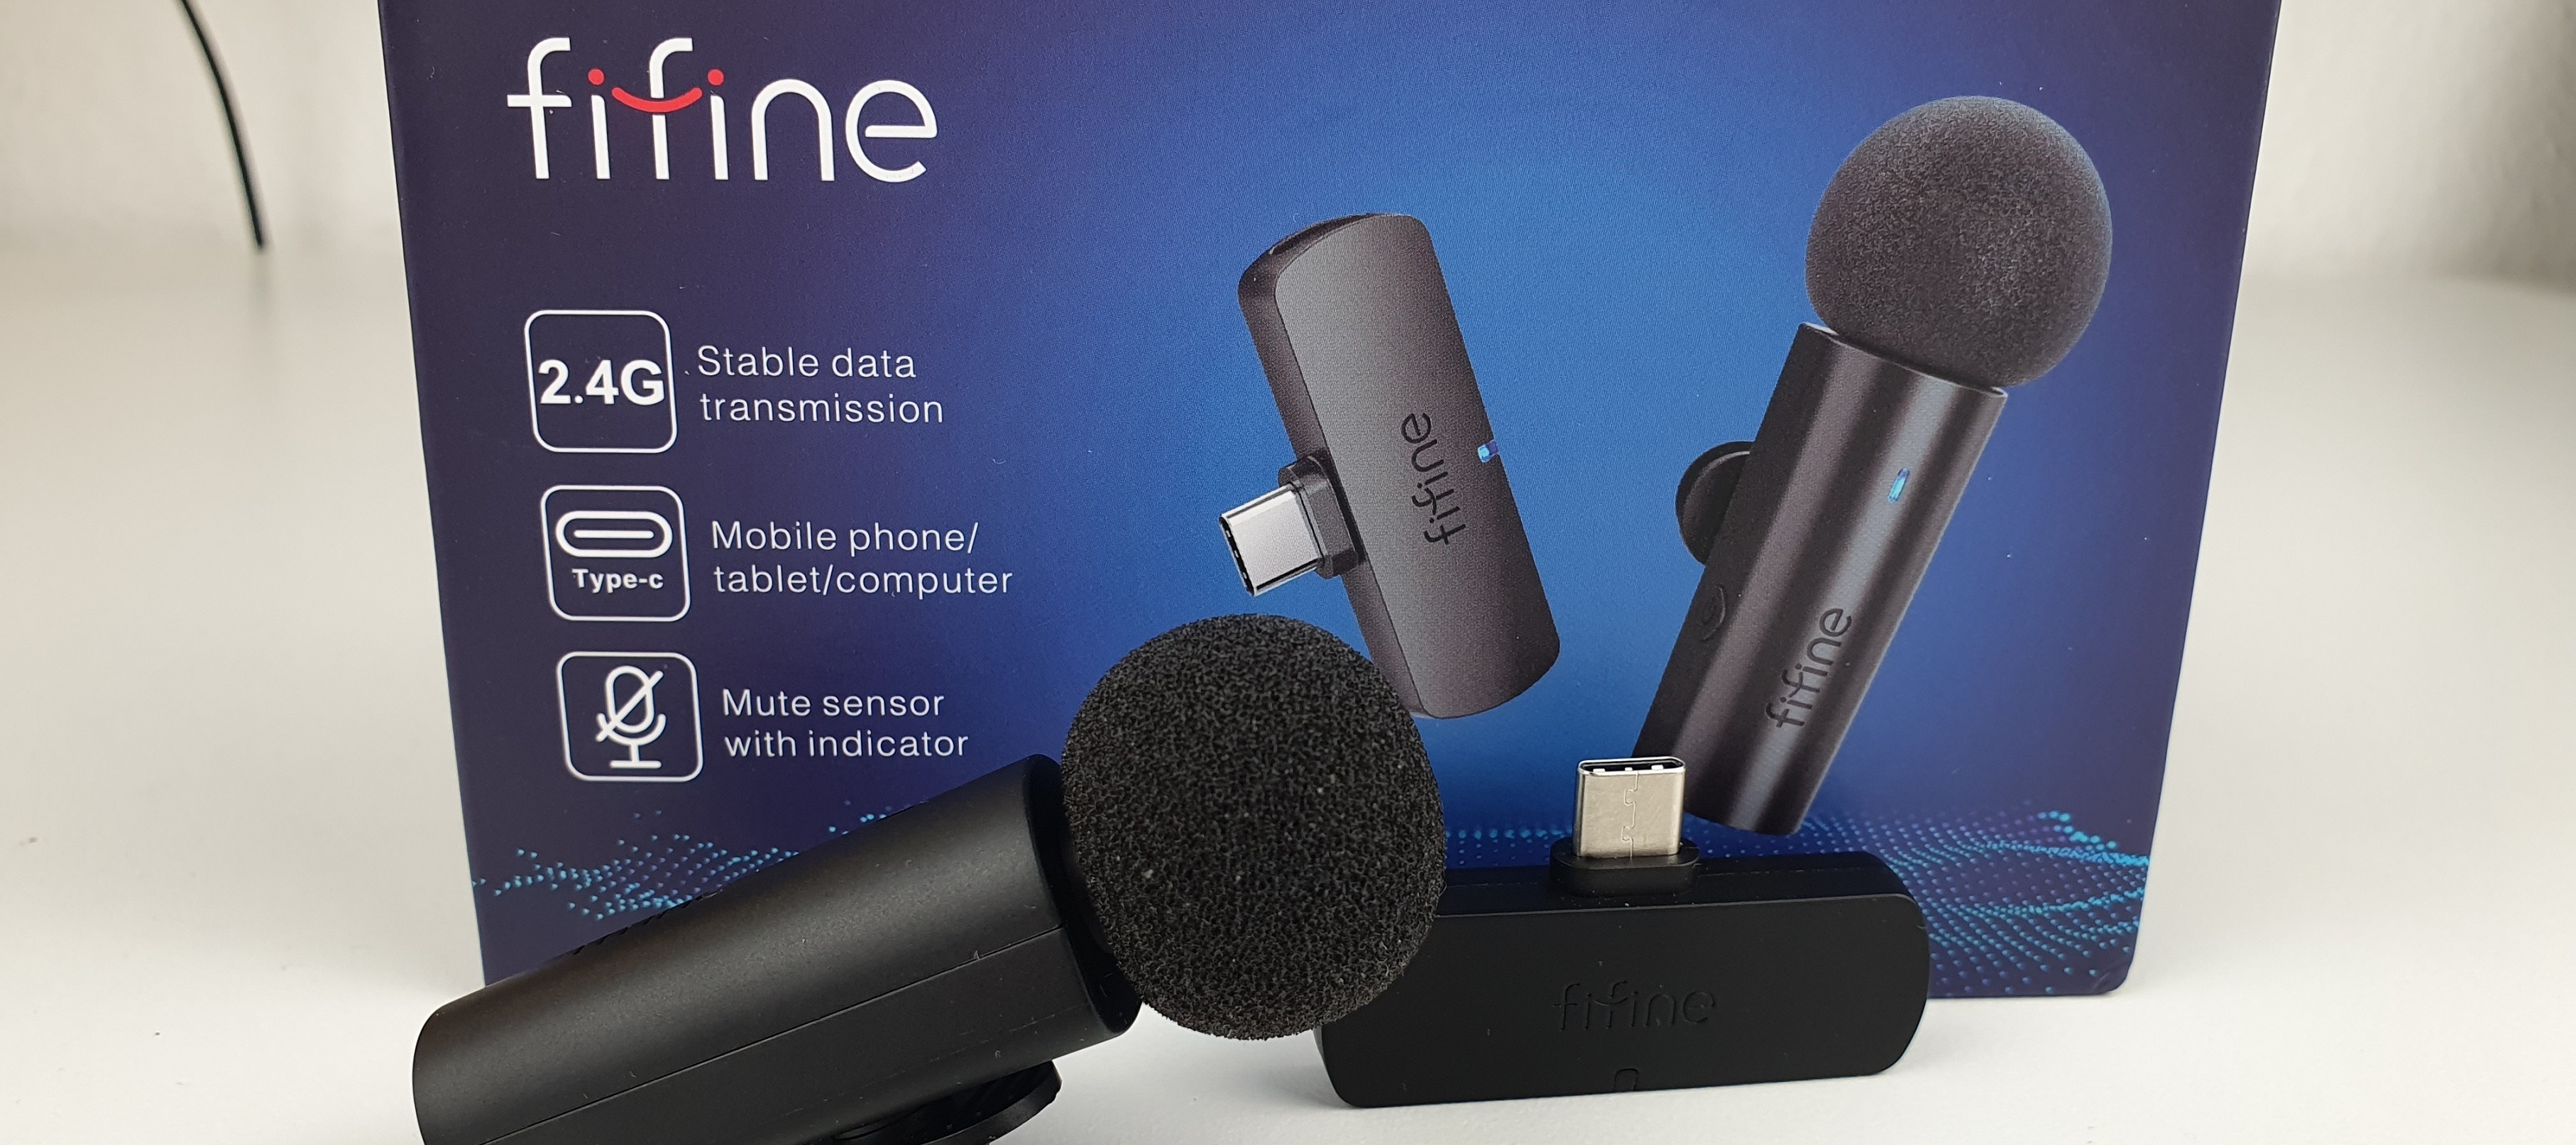 kabelloses mini Lavalier Mikrofon für das Handy (FIFINE M6)